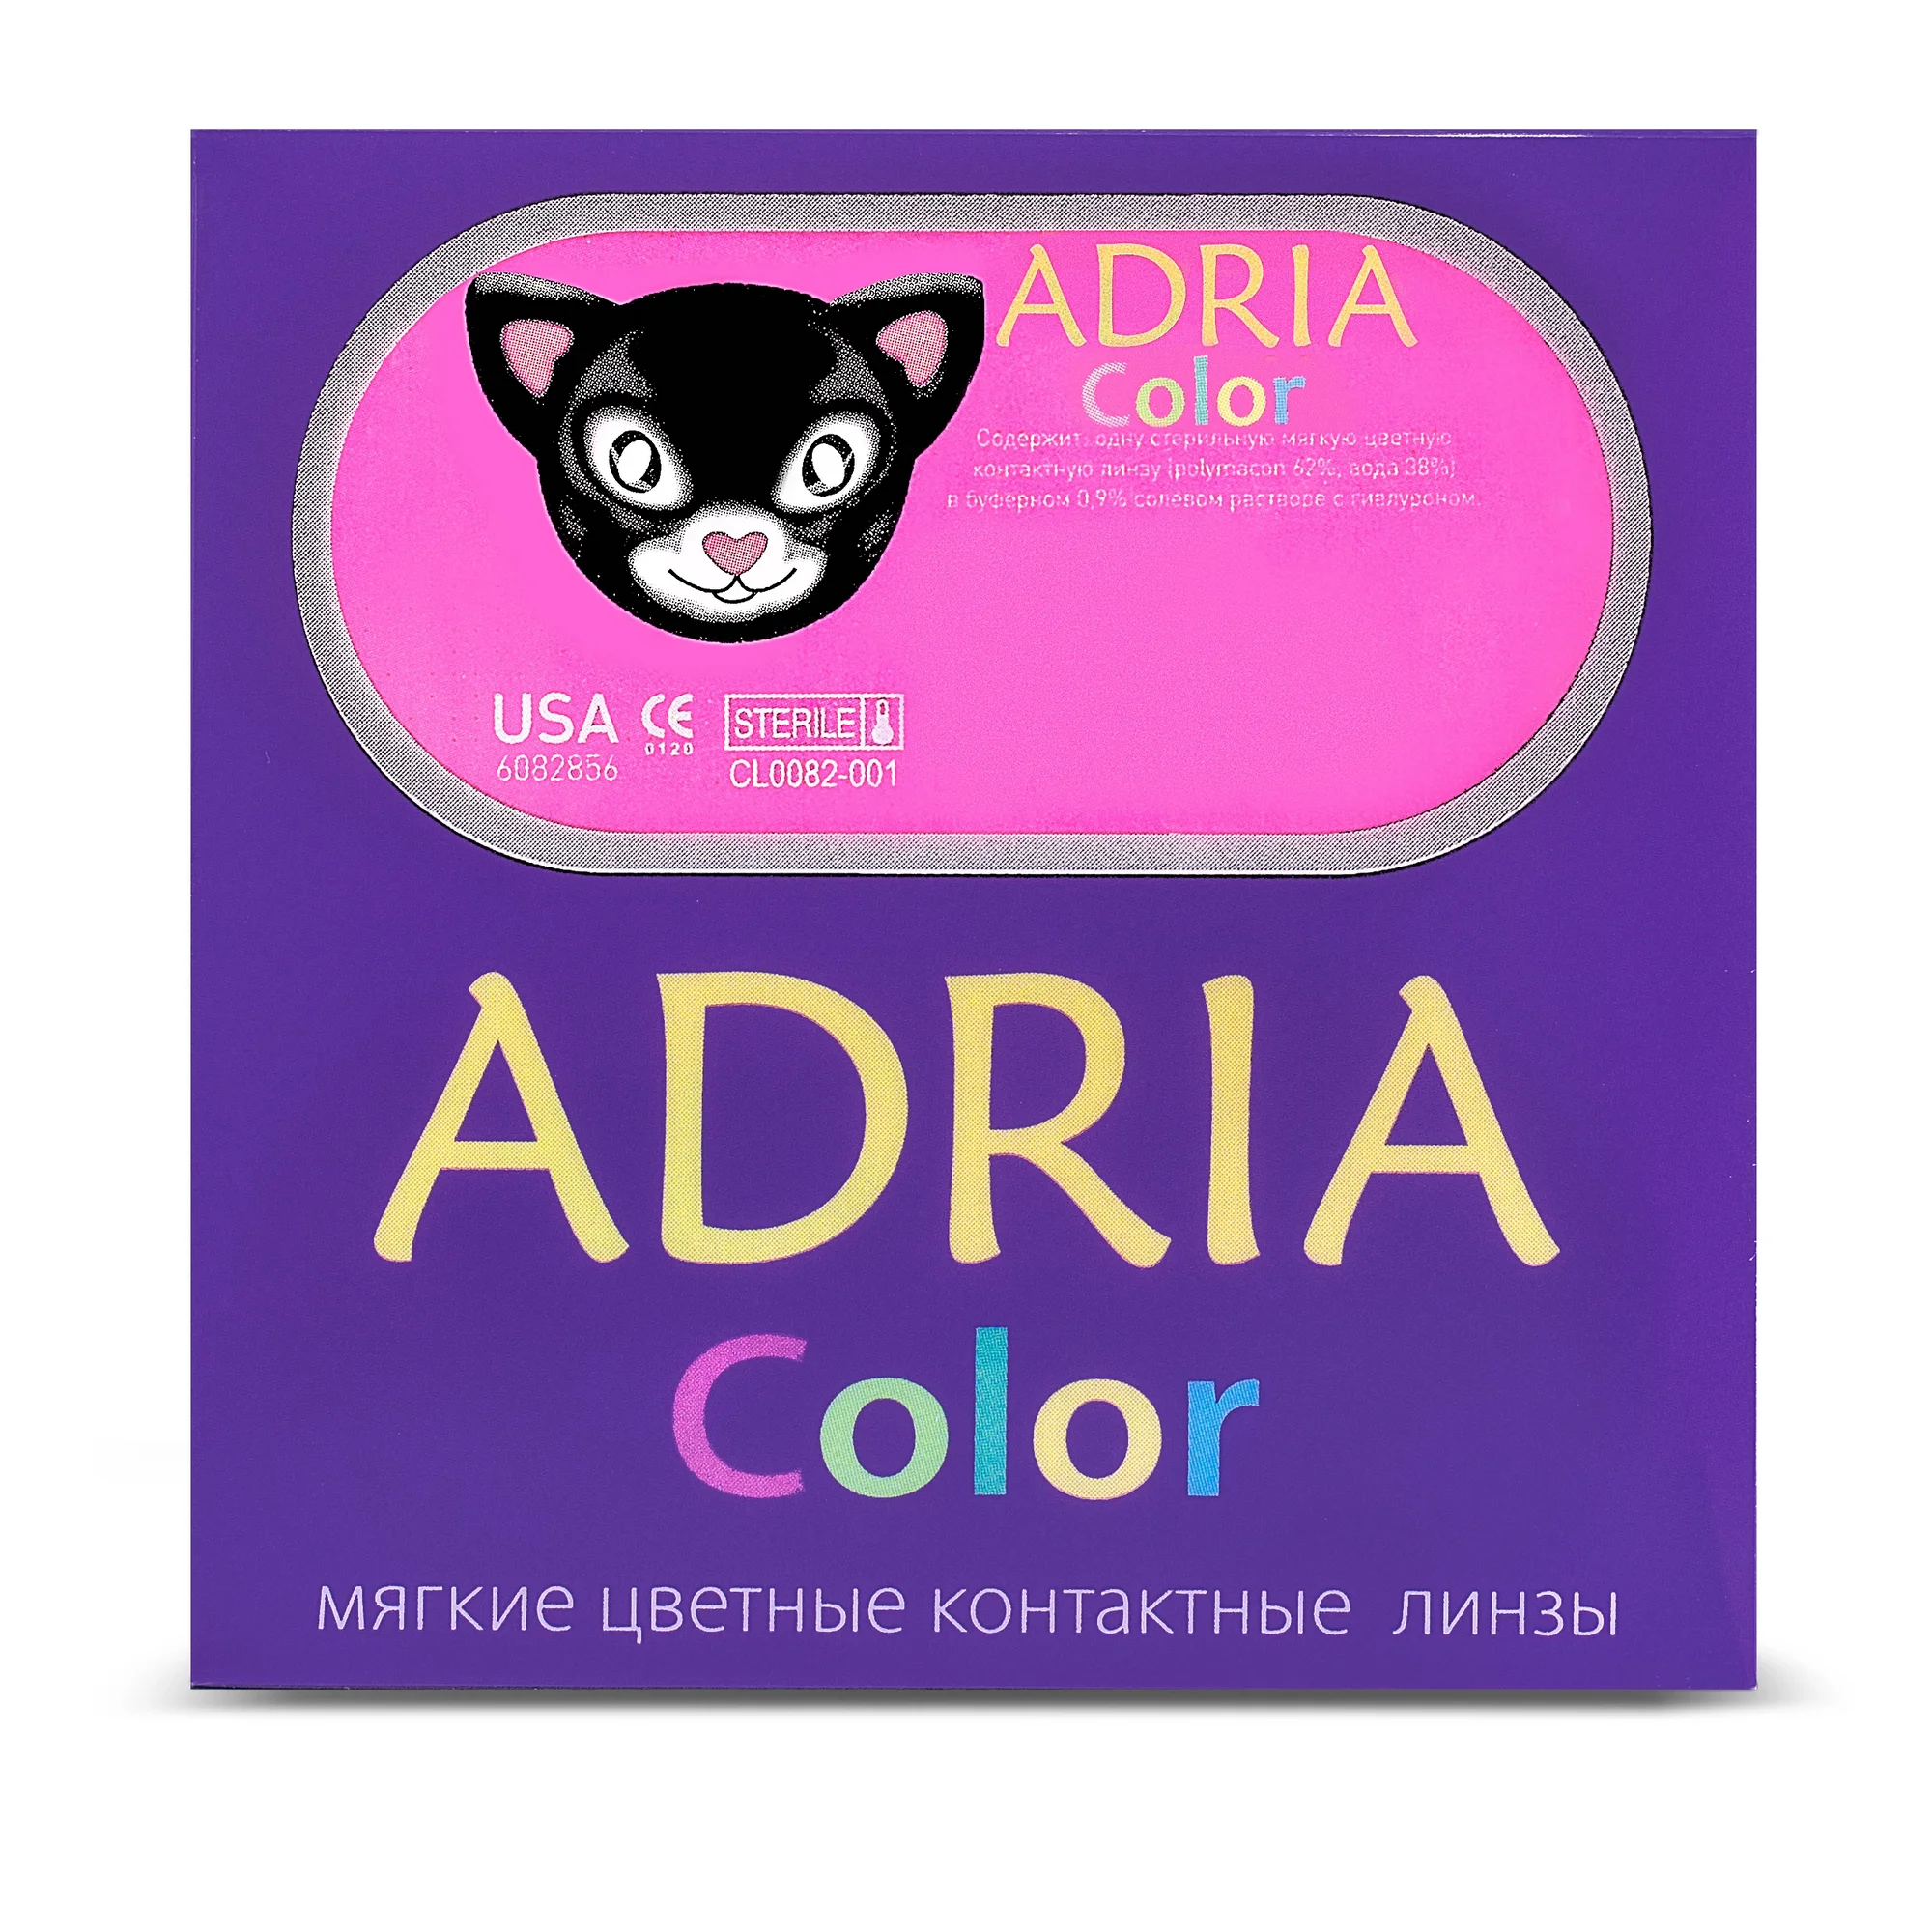 COLOR BOX ADRIA Color 1 Tone Lavender (сиреневый)